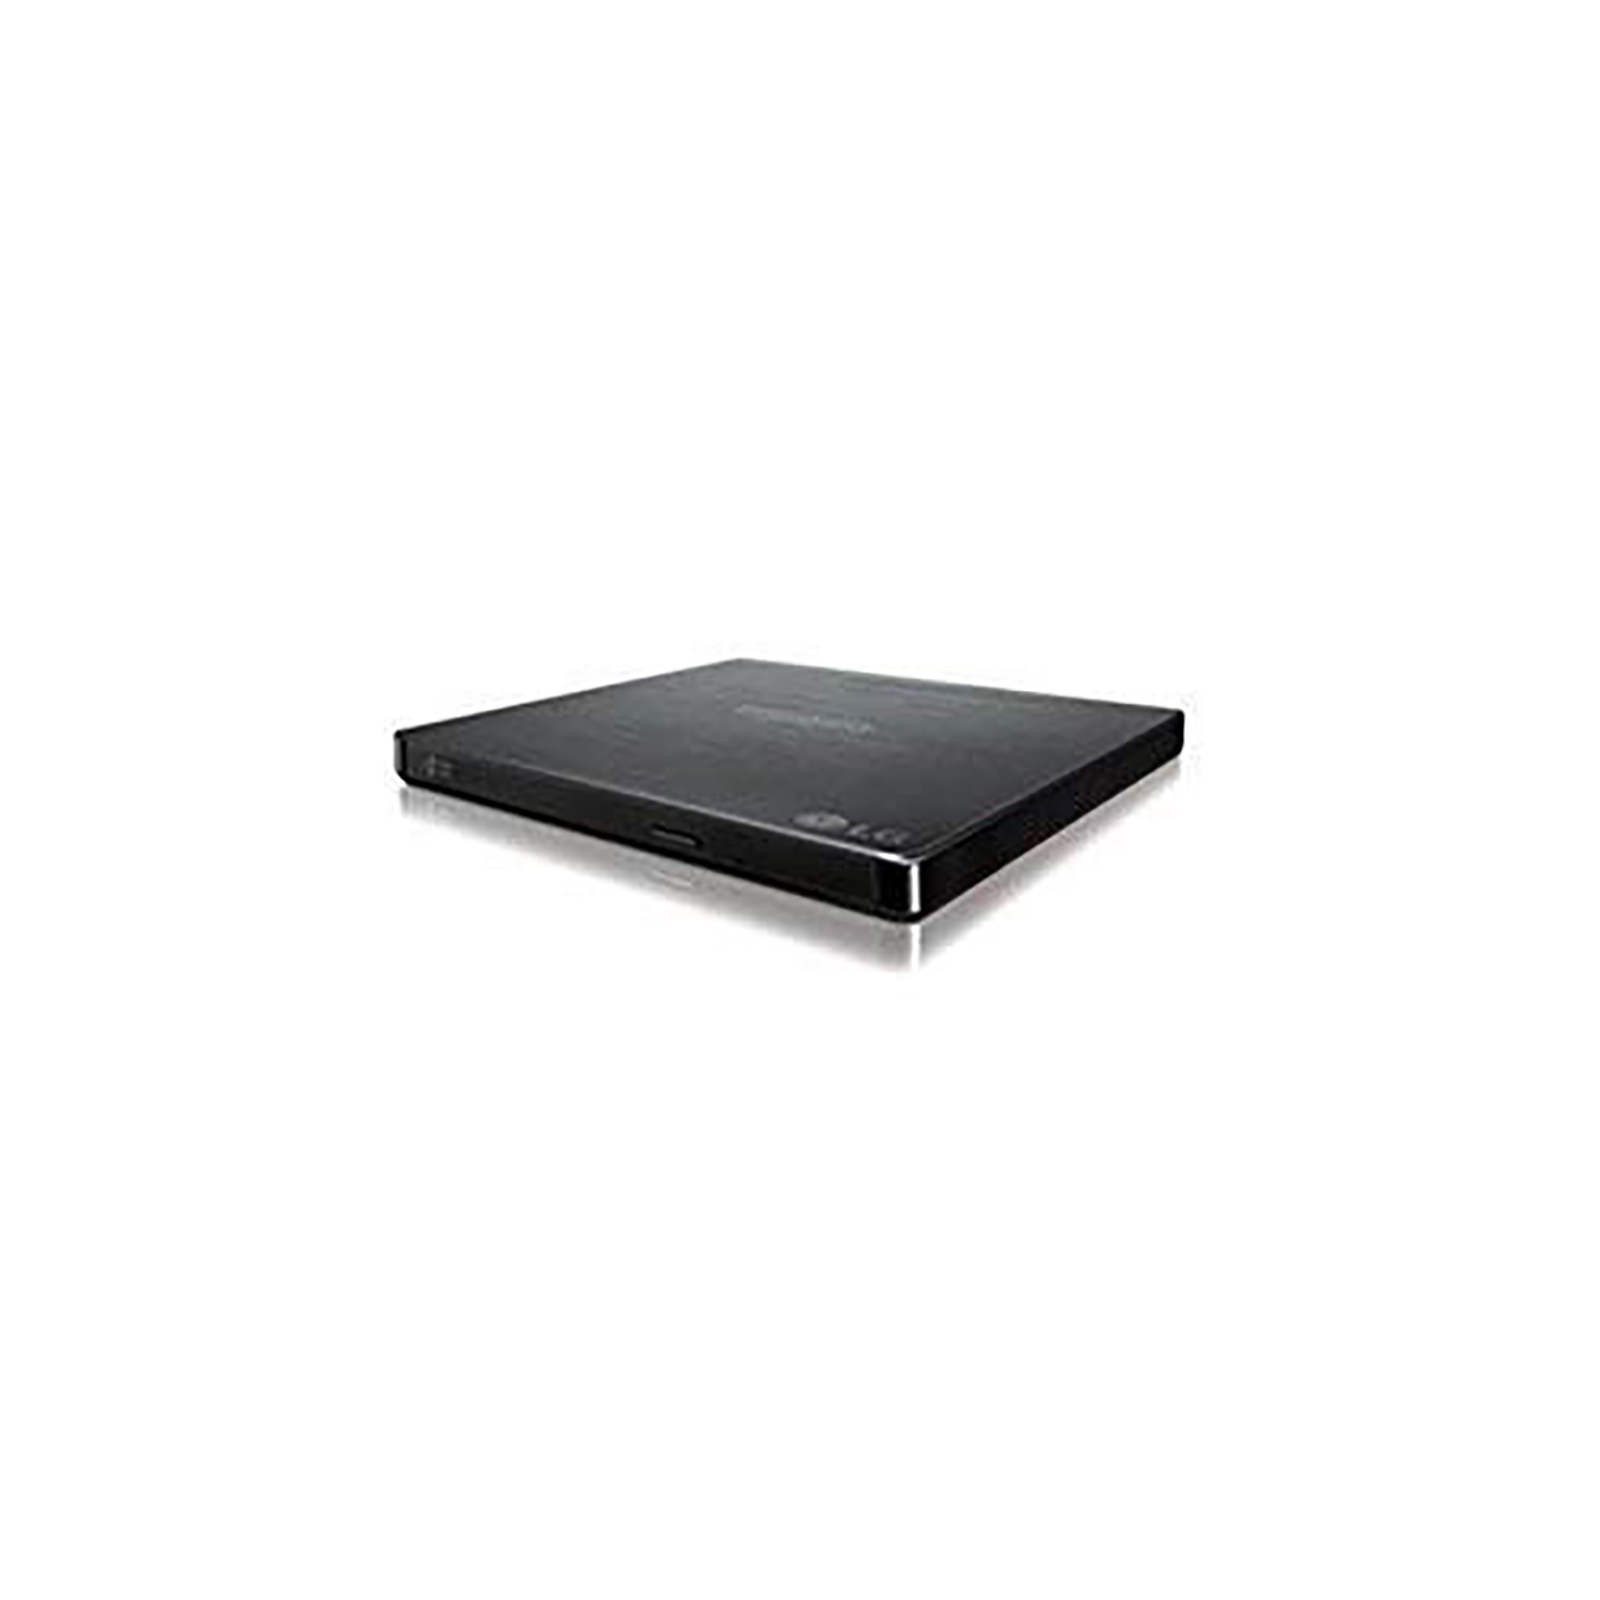 LG BP60NB10 Ultra Slim Portable External Blu-Ray/DVD Writer